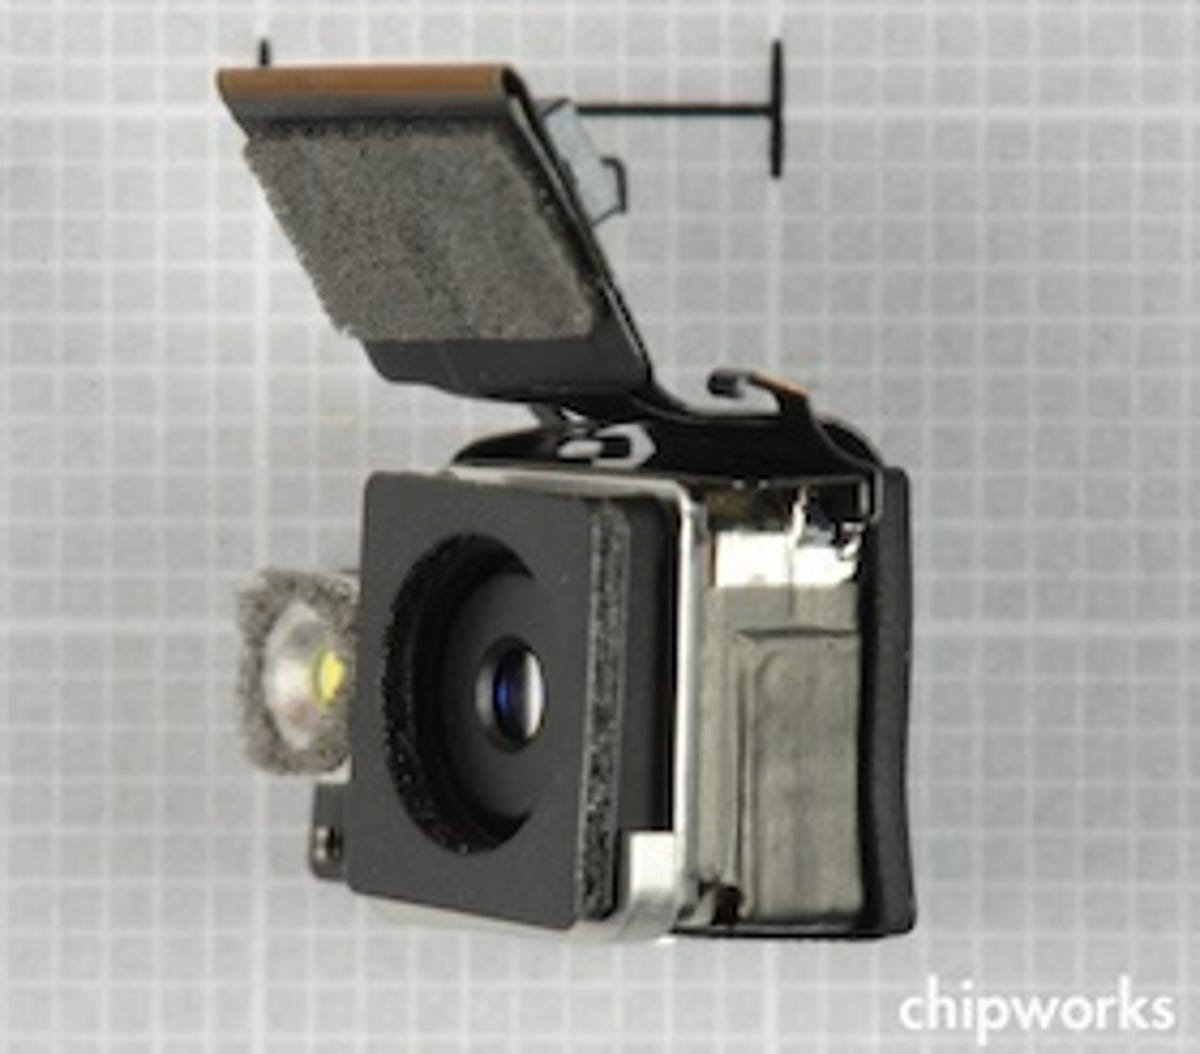 A closer look at the camera module.